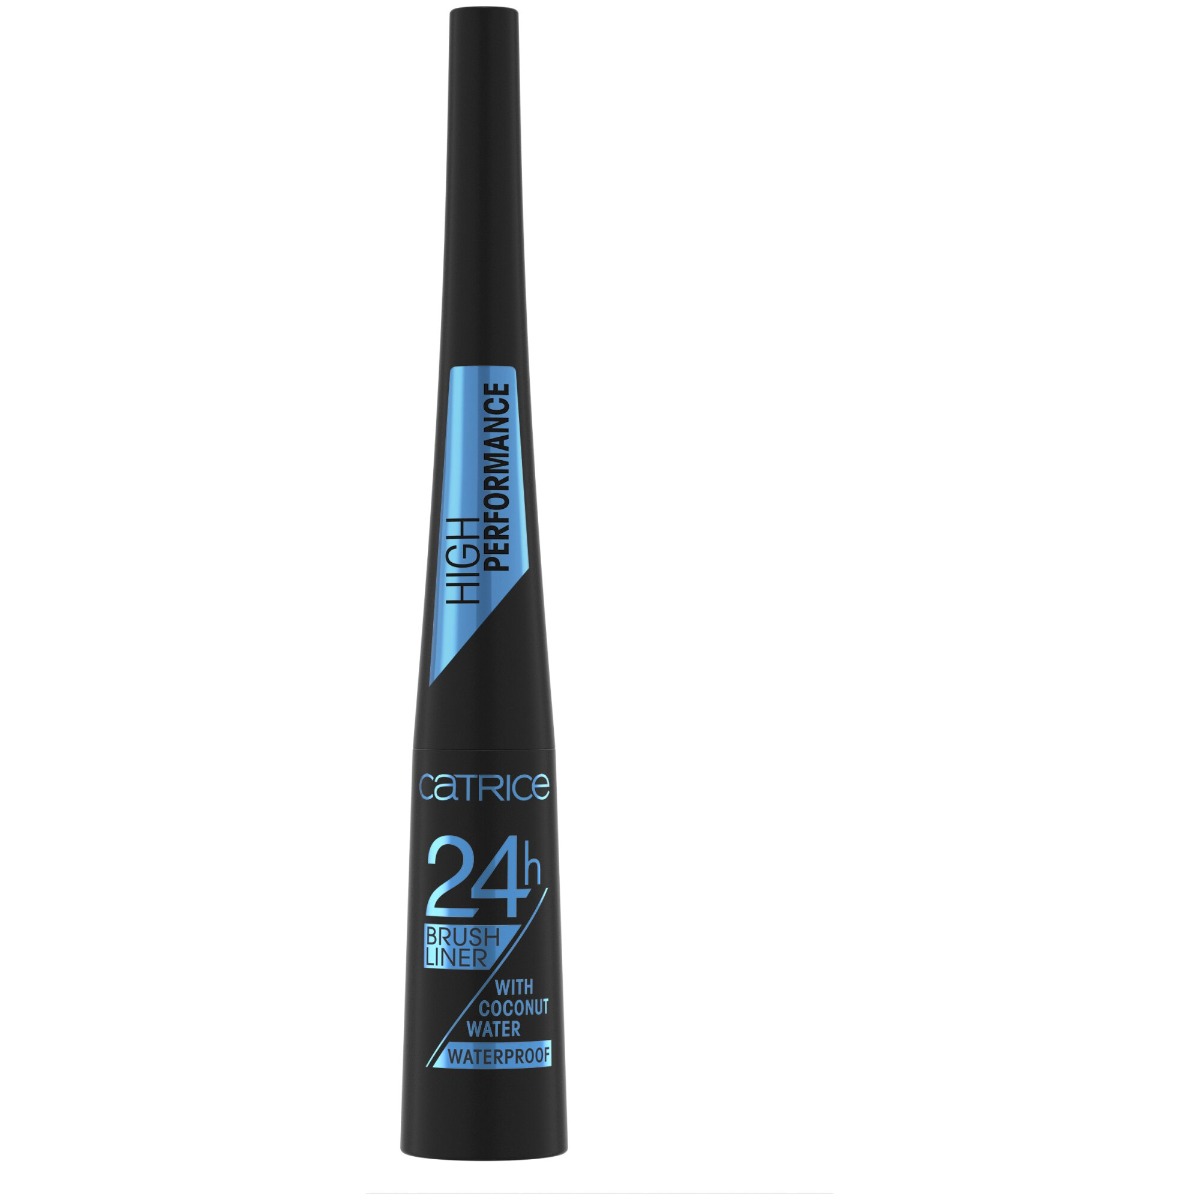 Tus pentru ochi rezistent la apa 24h Brush Liner Waterproof 010 - Ultra Black, 3ml, Catrice